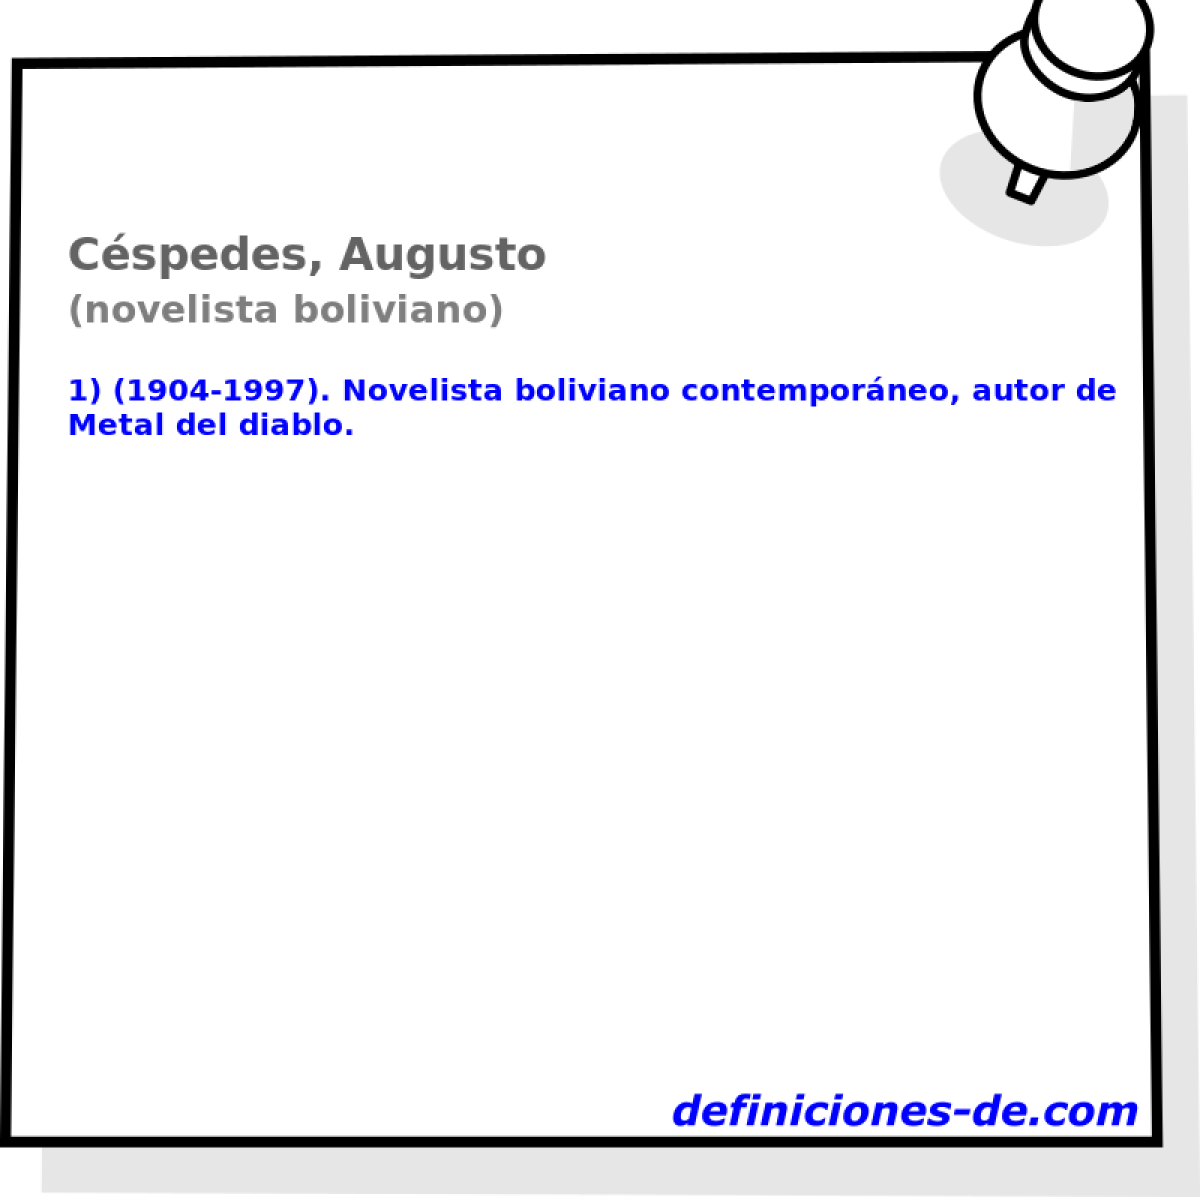 Cspedes, Augusto (novelista boliviano)